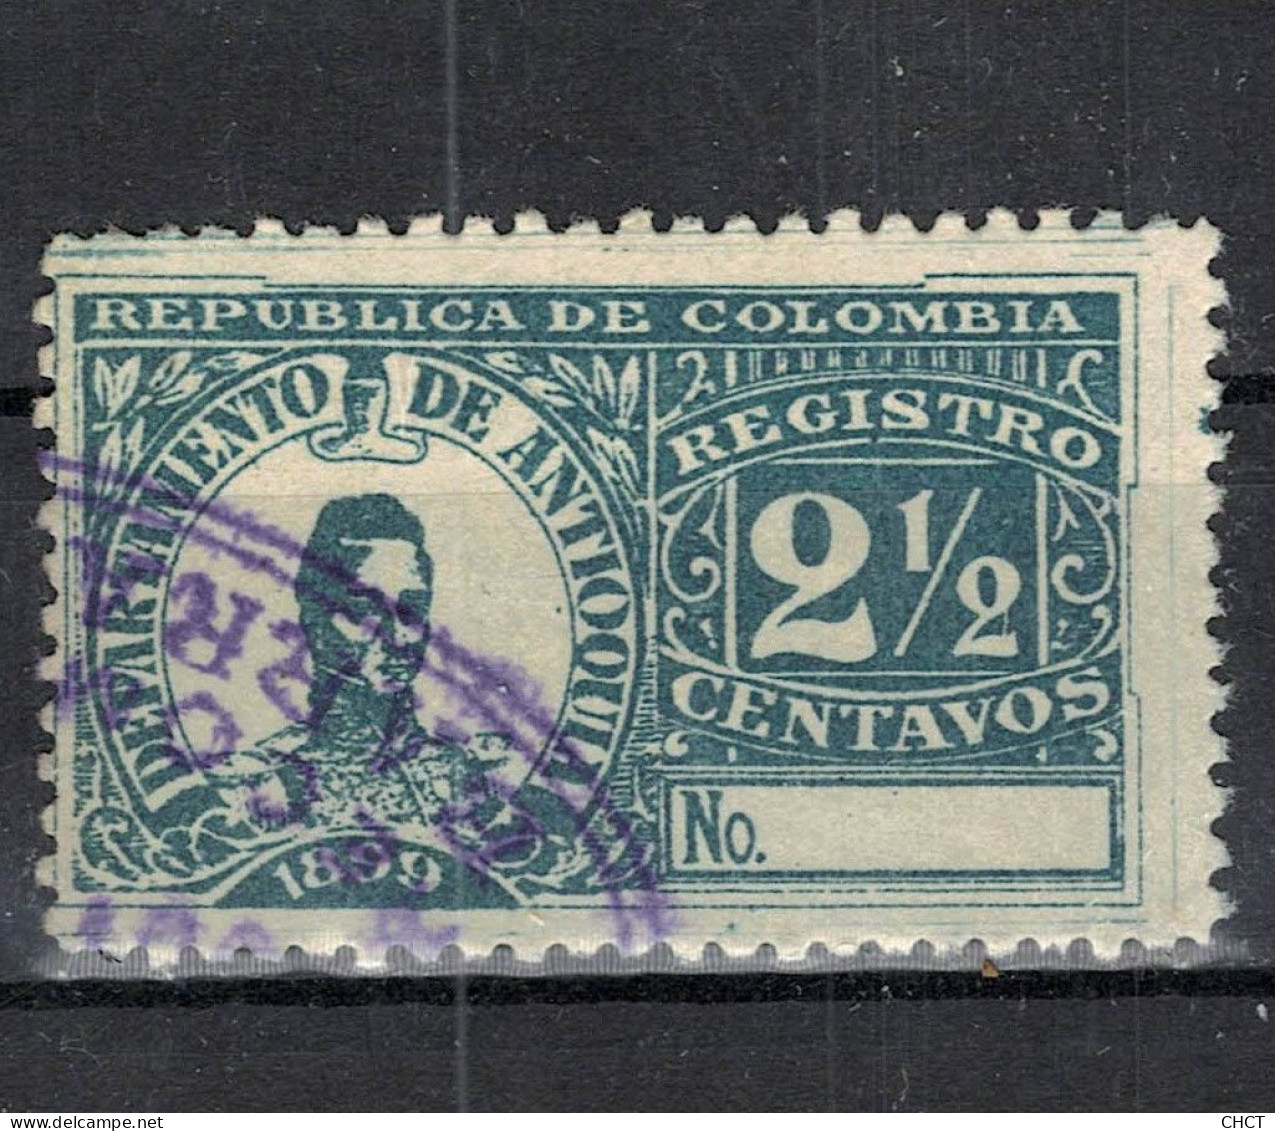 CHCT85 - Registro 2 1/2 Centavos, Used, 1899, Department Of Antioquia, Colombia - Colombie